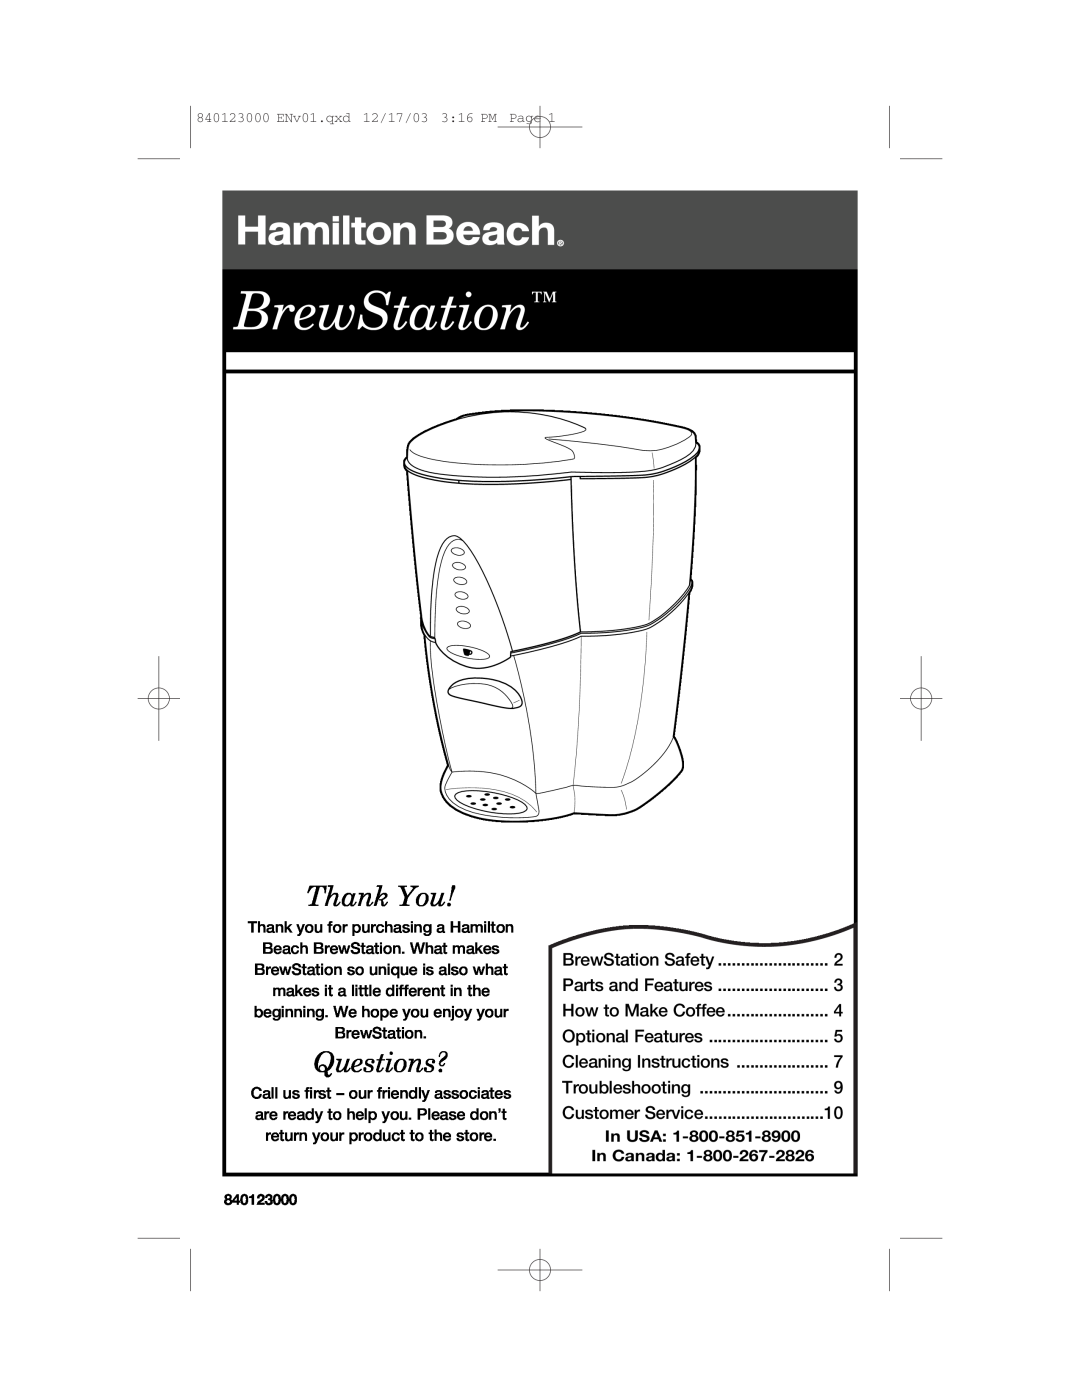 Hamilton Beach 840123000 manual BrewStation, Thank You, Questions?, In USA In Canada 